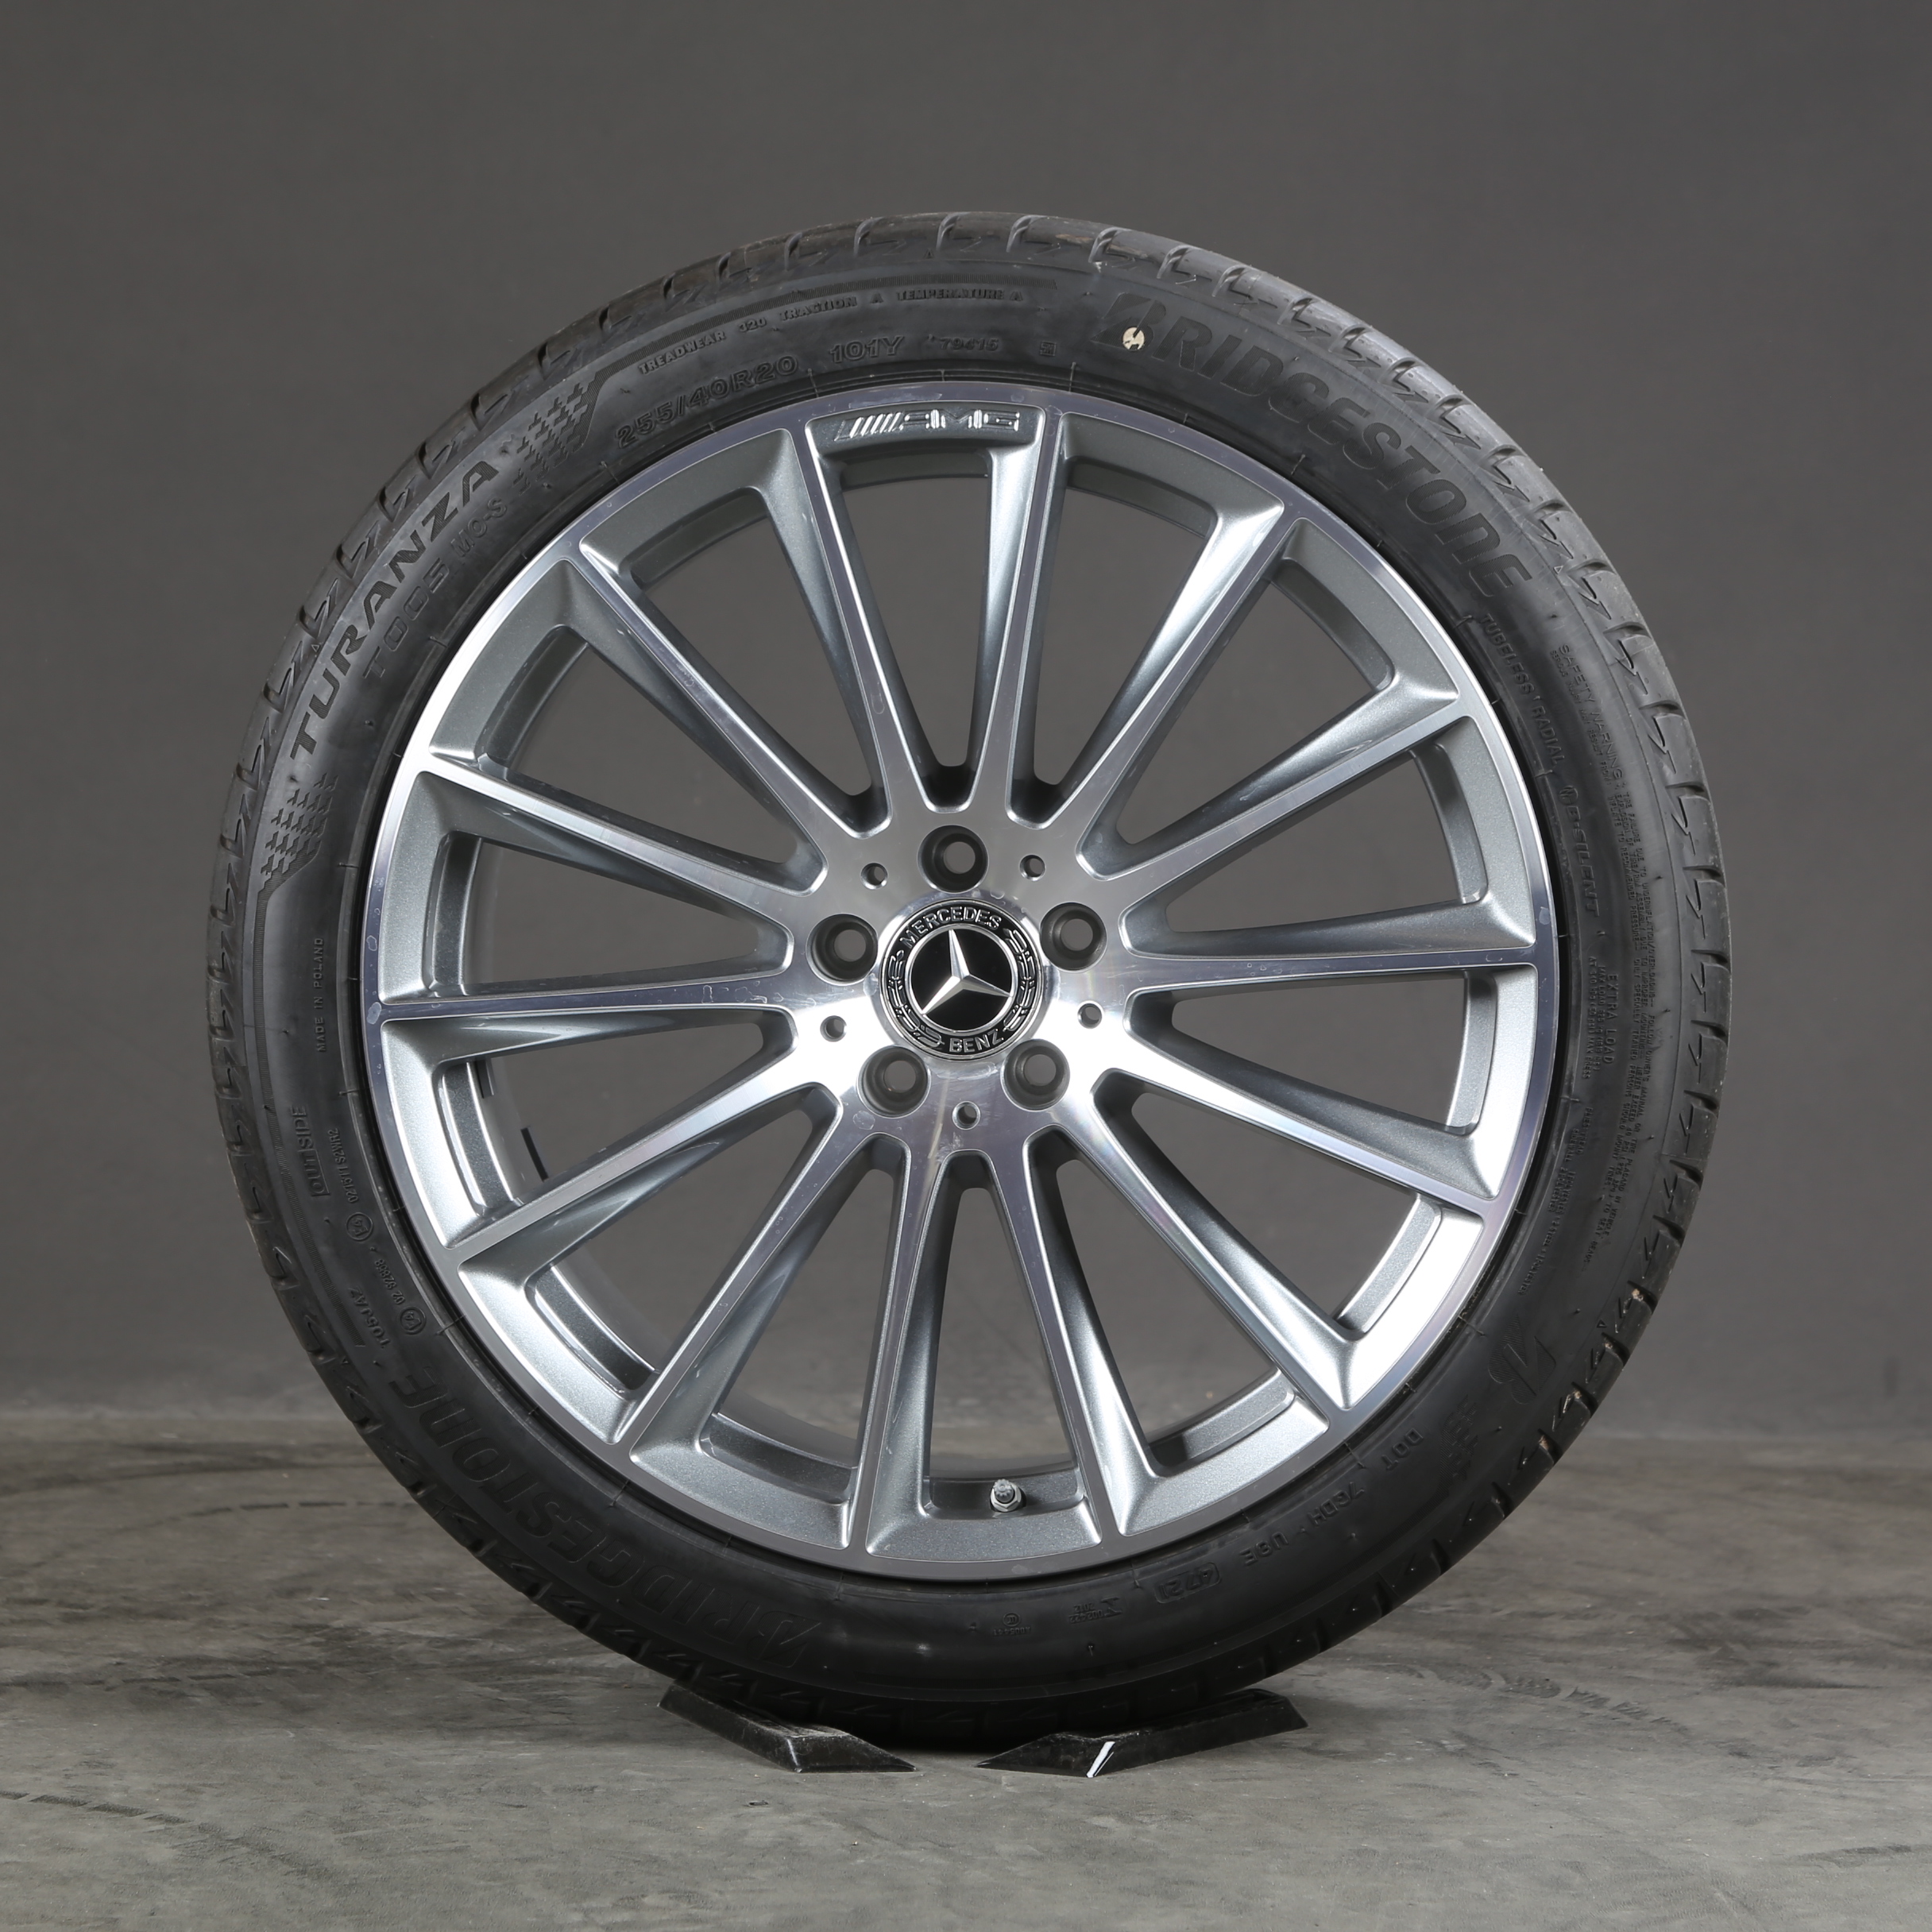 20 inch summer wheels AMG original Mercedes S-Class W223 A2234011500 summer tires